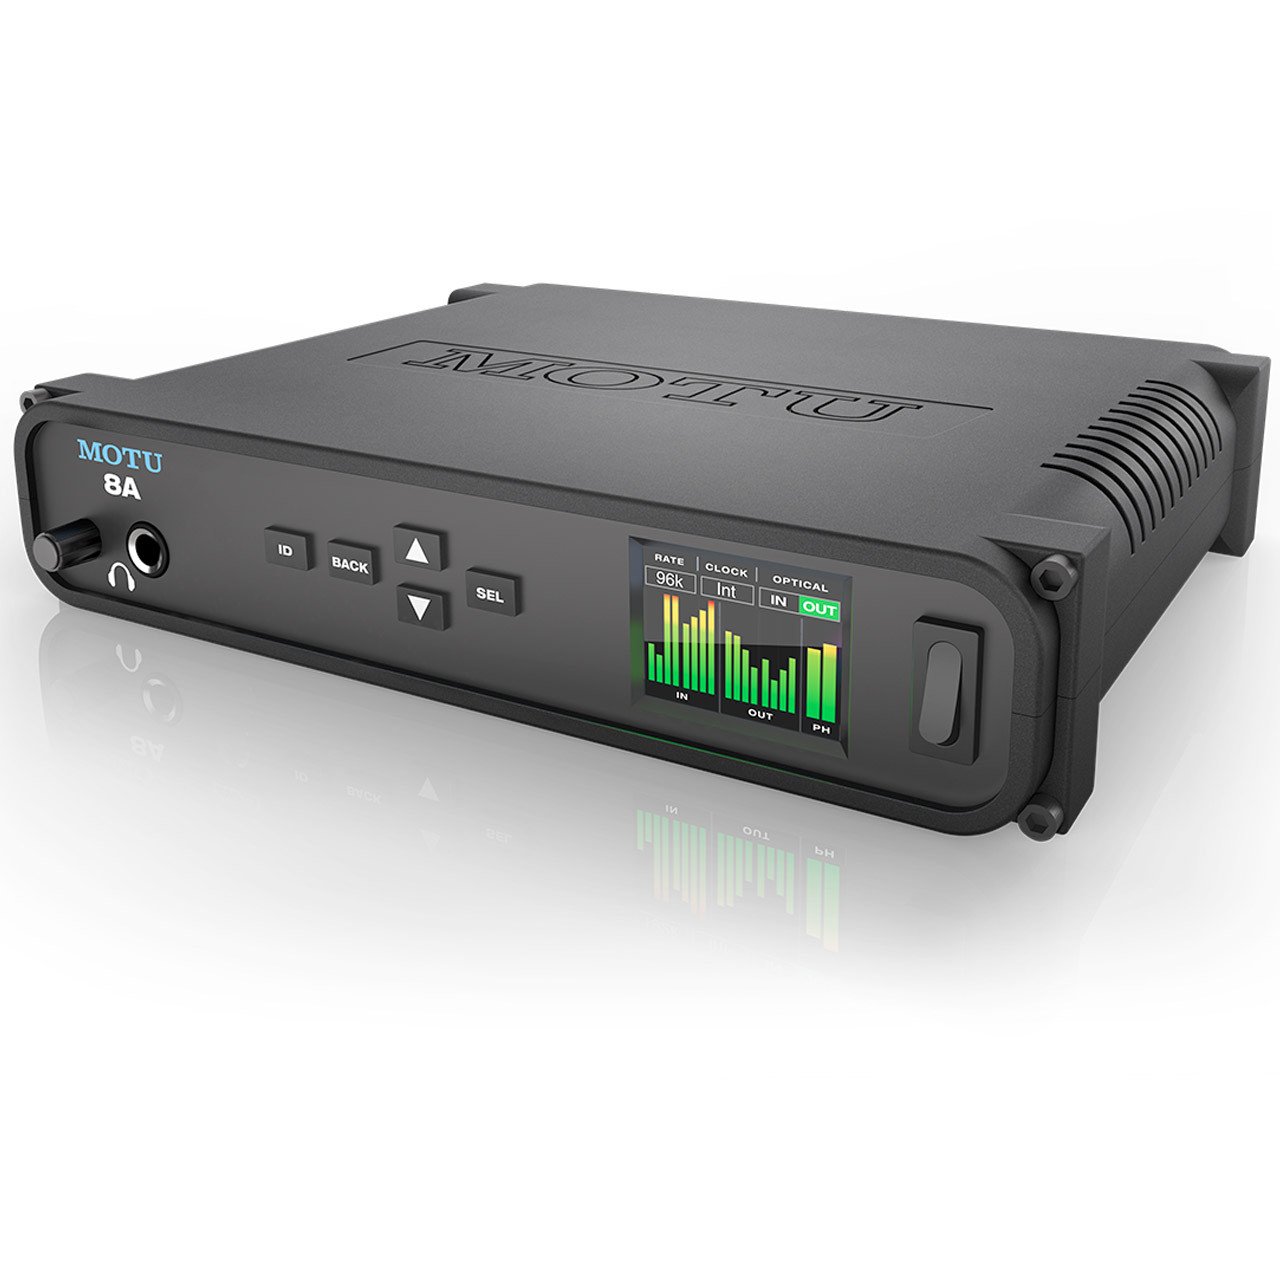 Thunderbolt Interfaces - MOTU 8A - AVB Thunderbolt/USB3 Audio Interface With ESS Sabre32 DAC